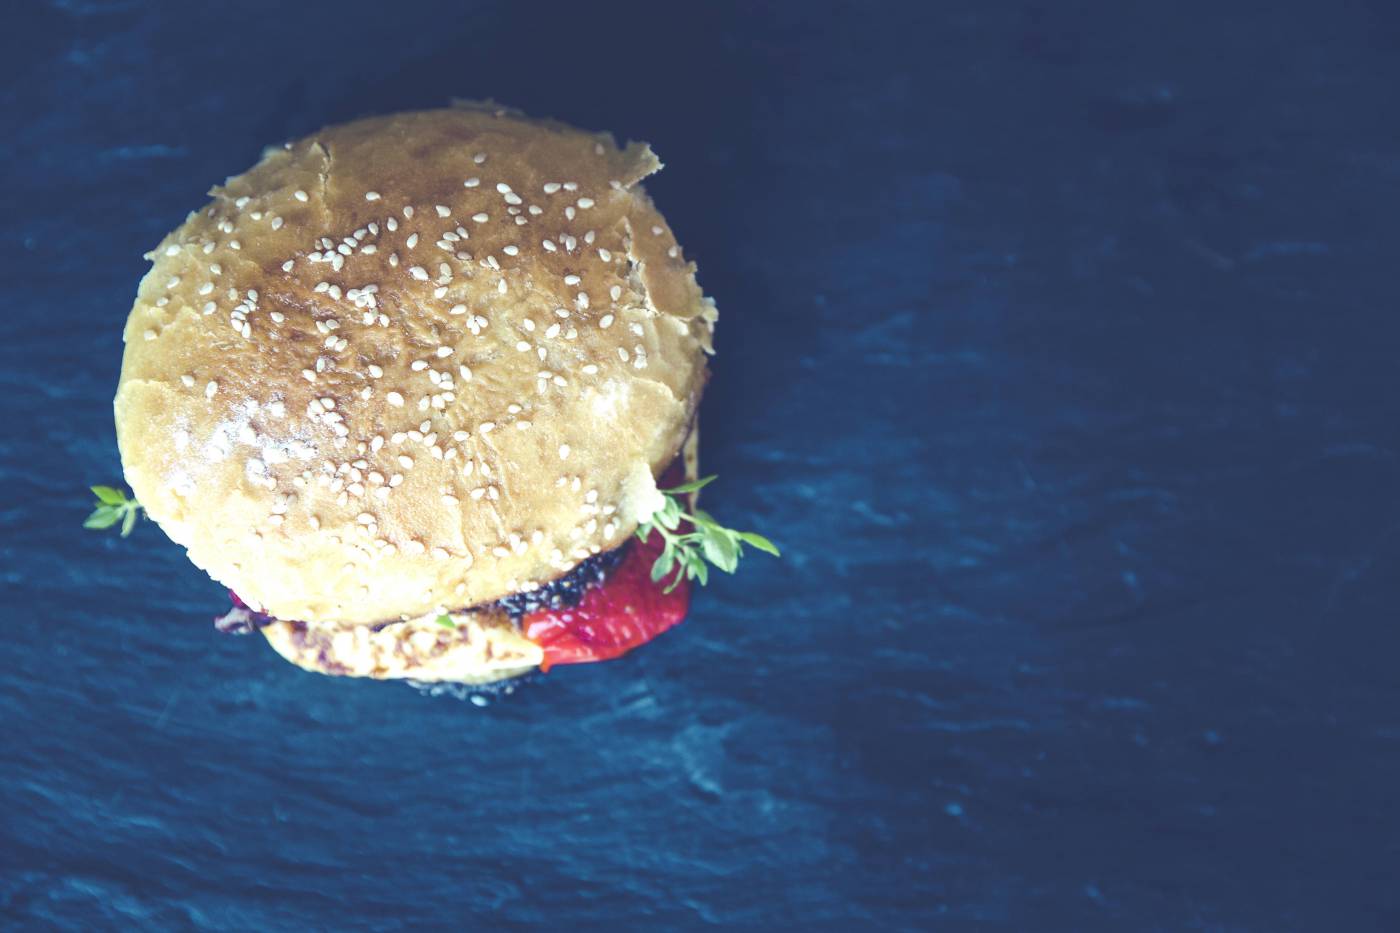 homemade veggie burger/ picture